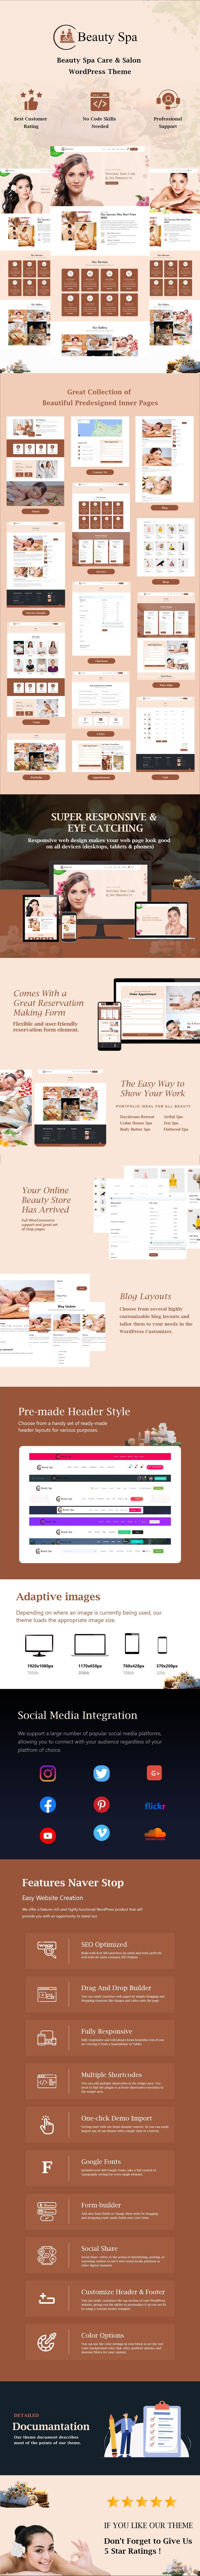 Beauty Spa Care & Salon WordPress Theme - Features Image 1